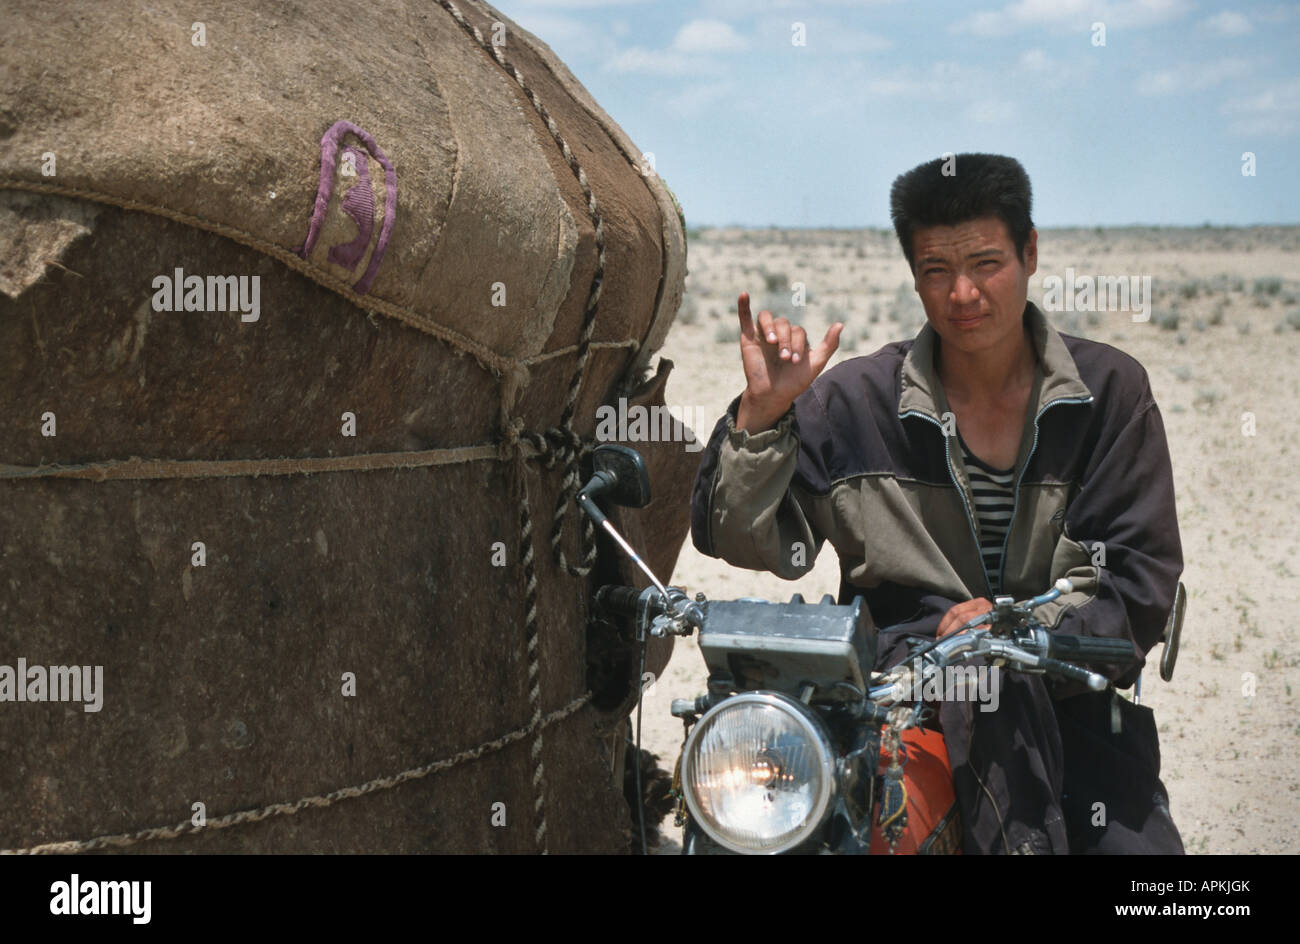 Il kazako pastore con un motociclo oltre ad una yurt, Kazakistan, Kyzyl Kum Foto Stock